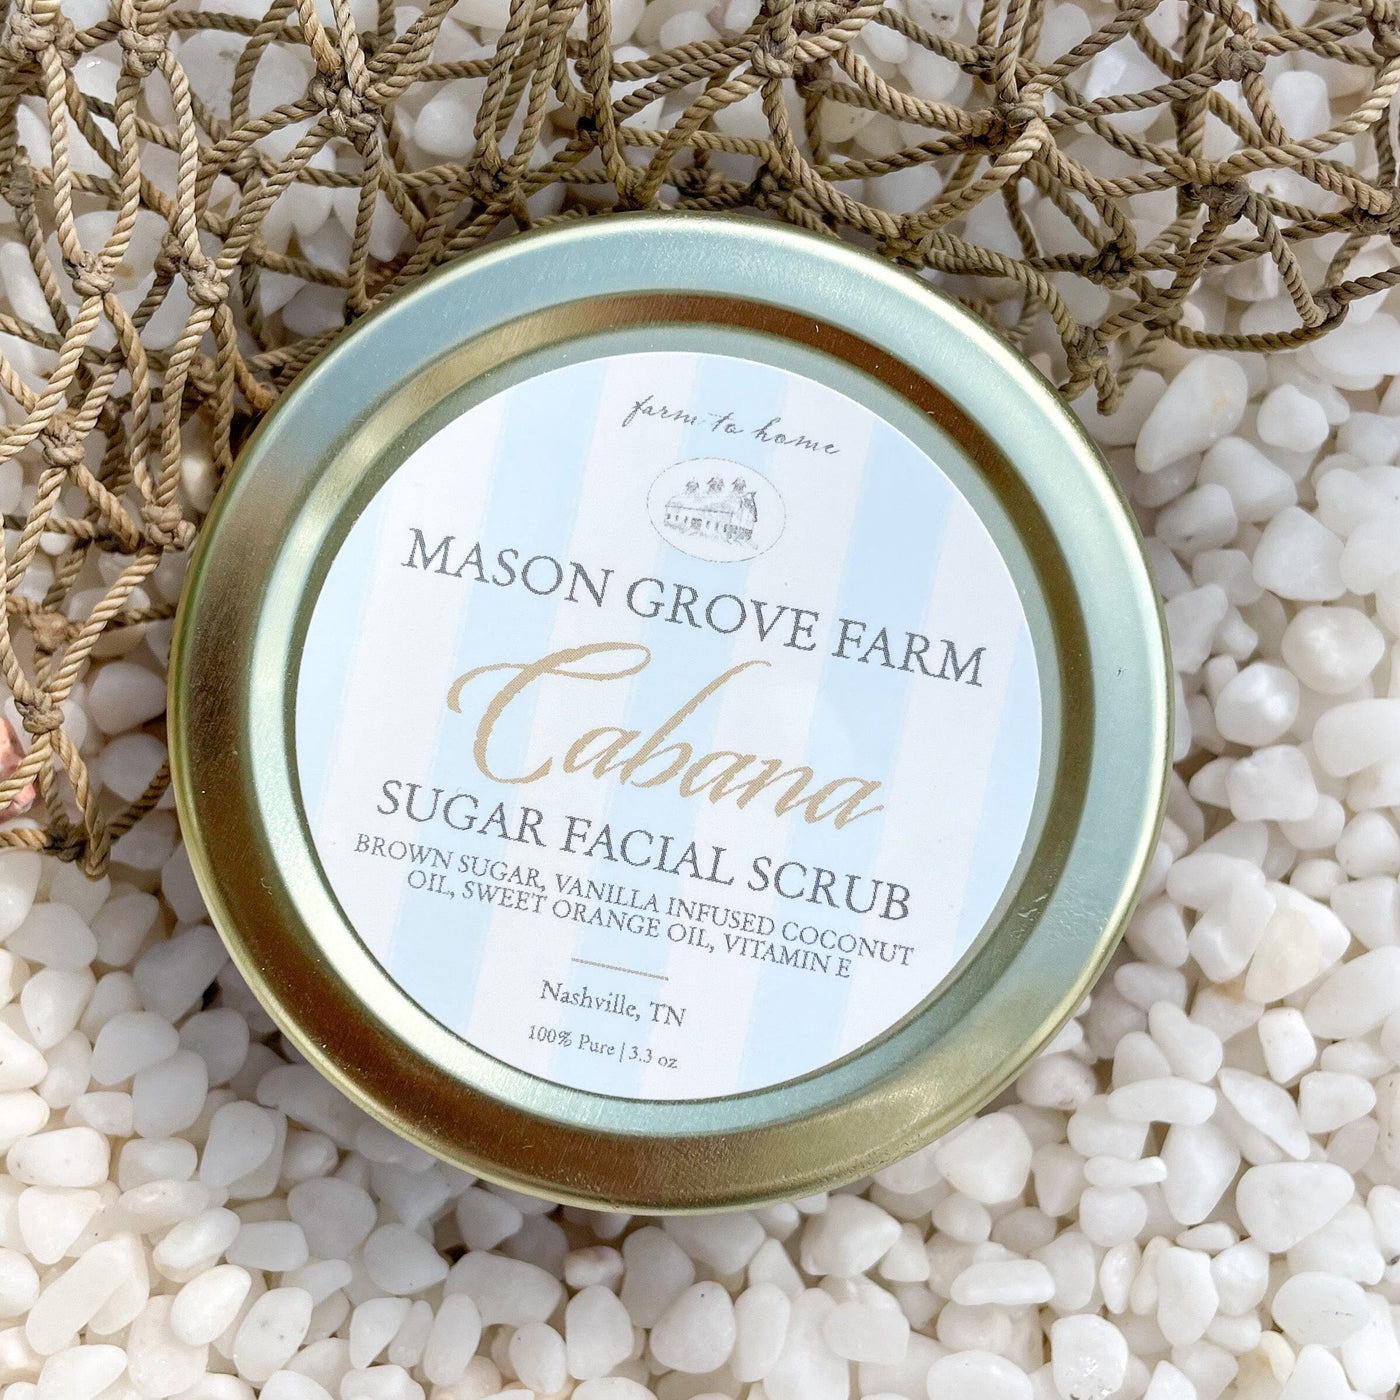 Cabana Sugar Facial Scrub Skin Care Mason Grove Farm 